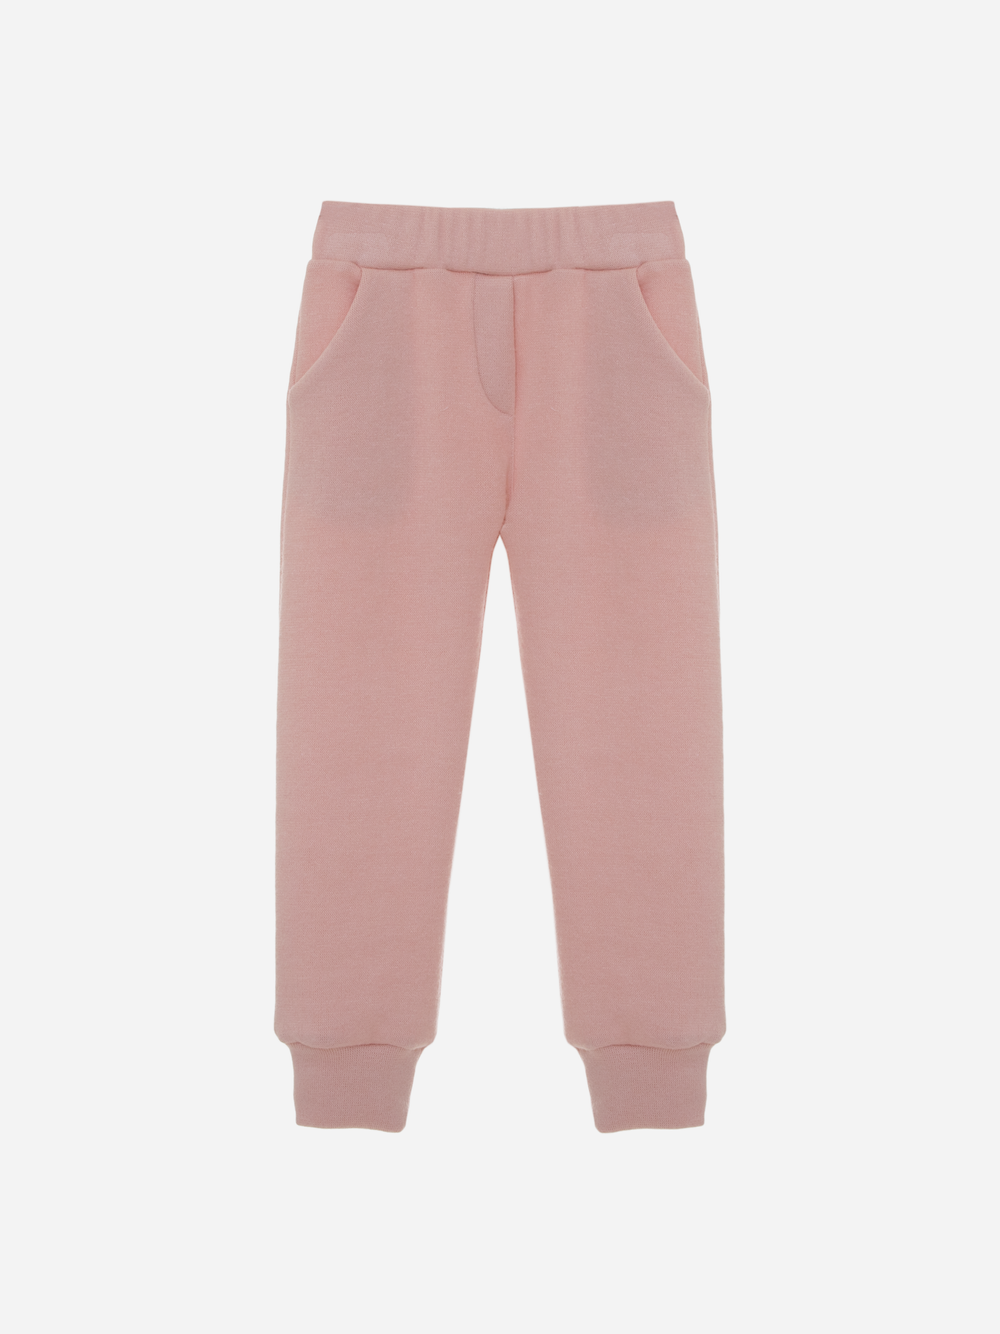 Pale Pink Interlock Pants 